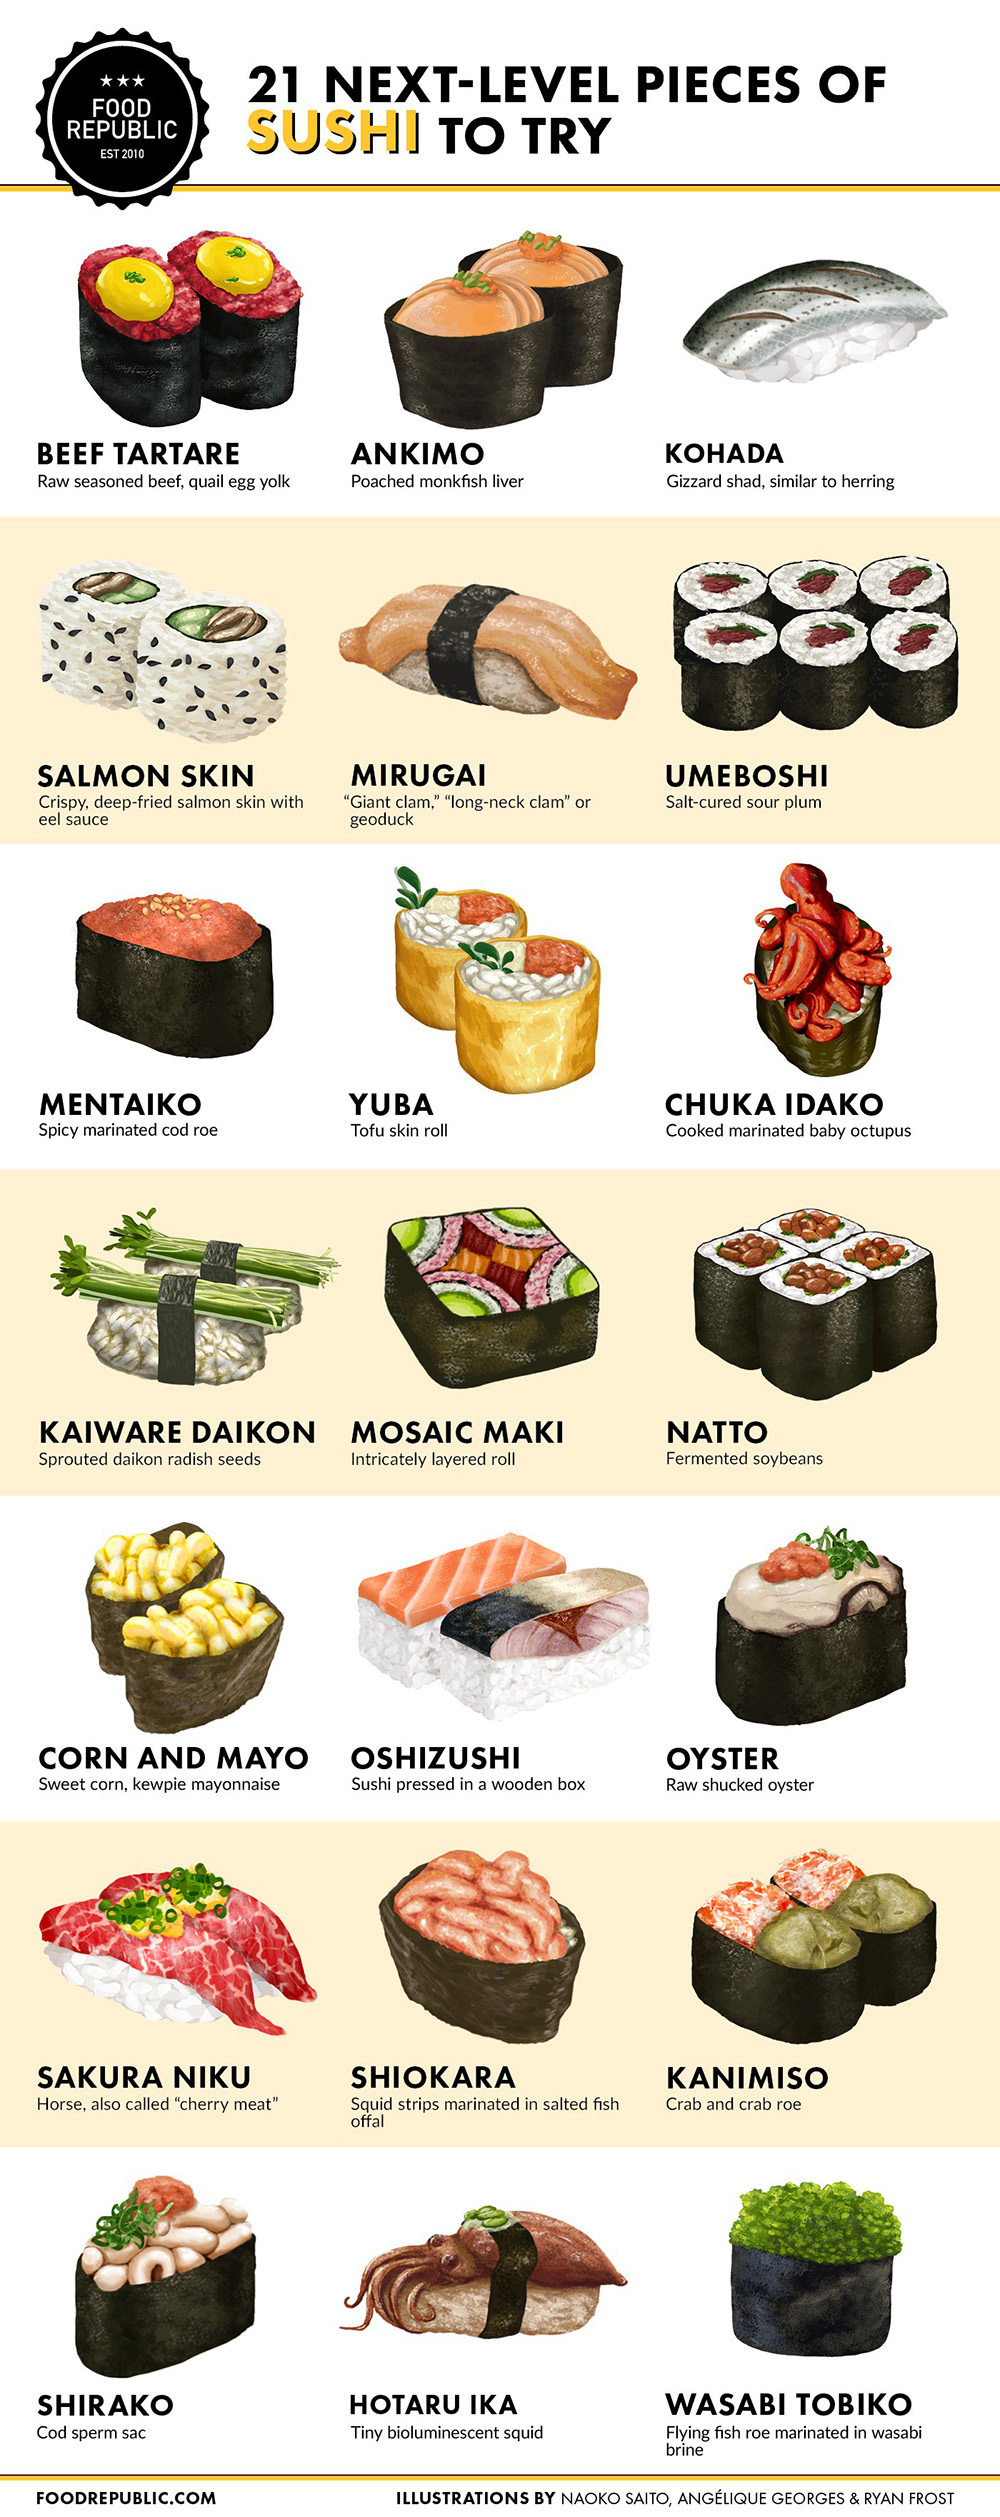 Japans eten special